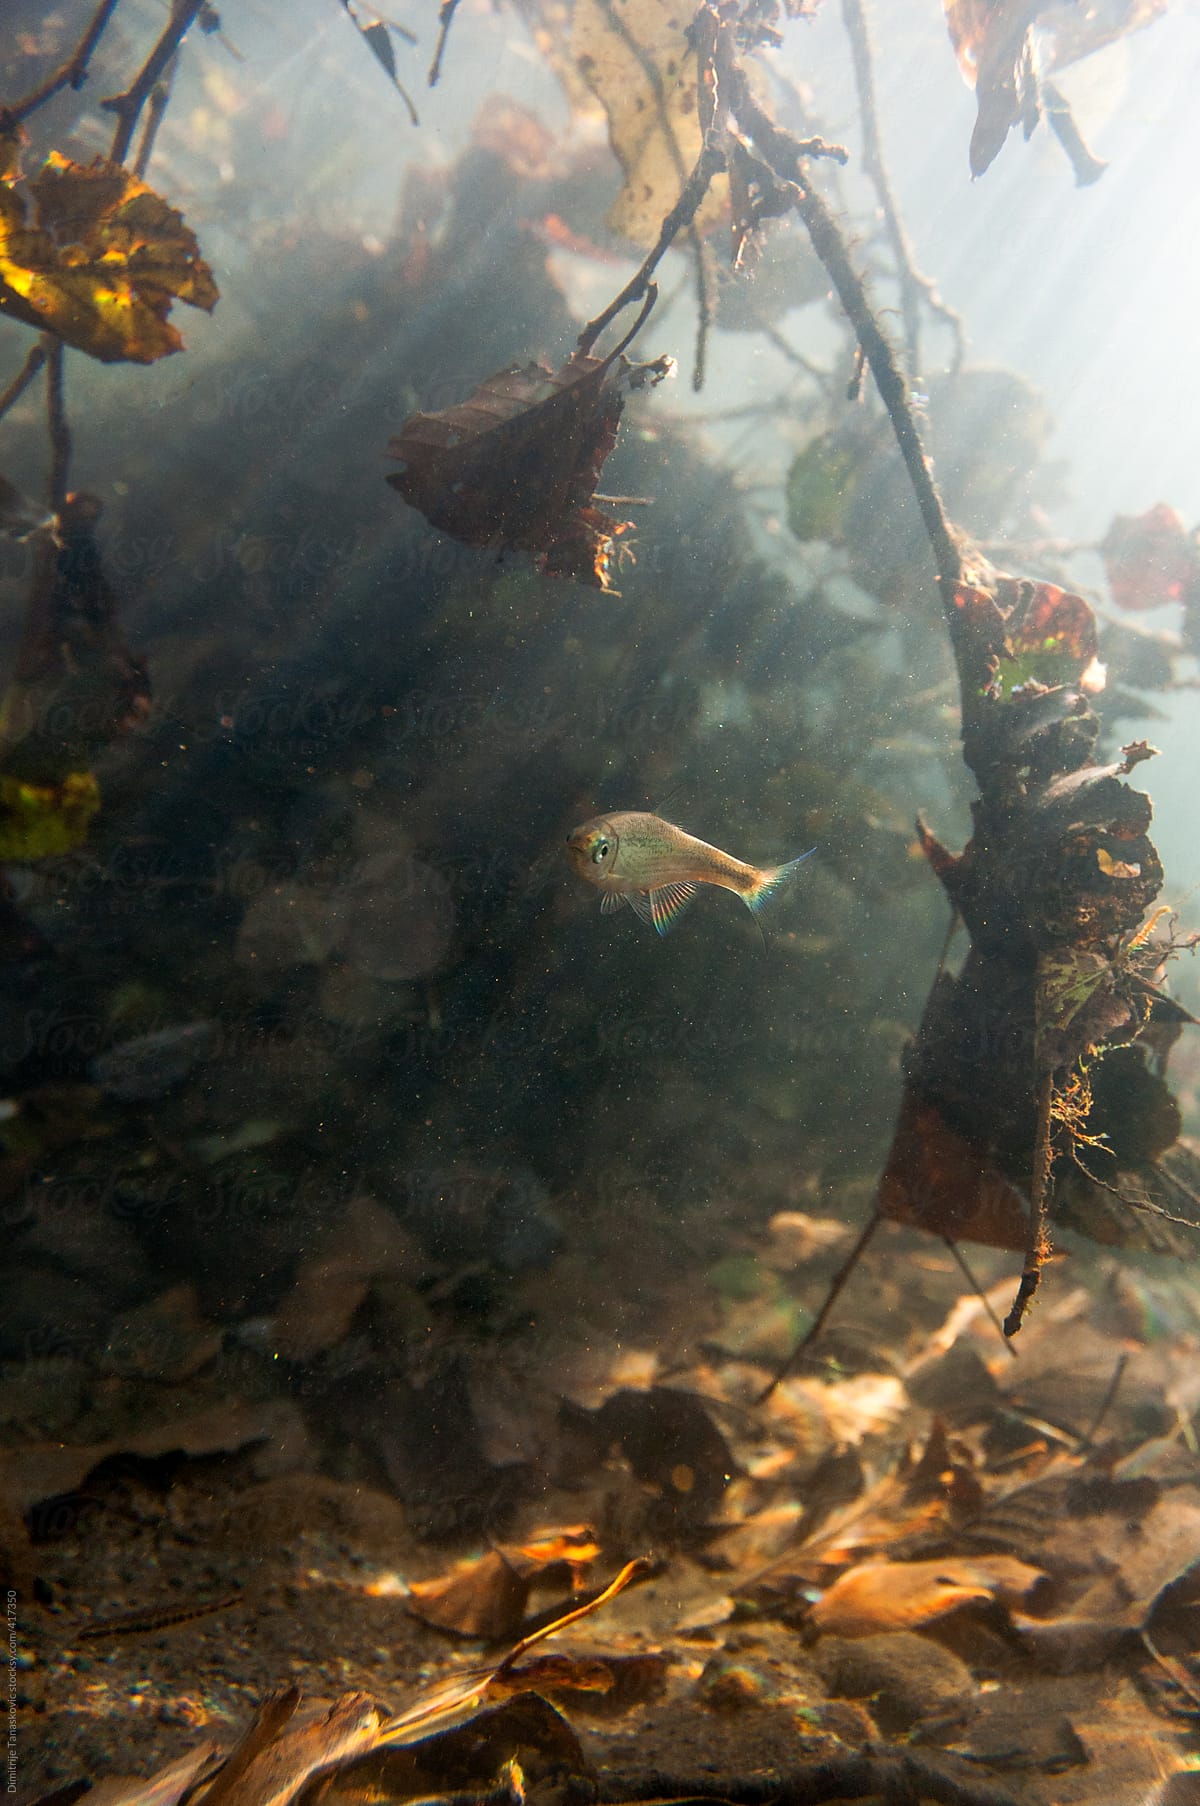 Fish swimming between underawater plants